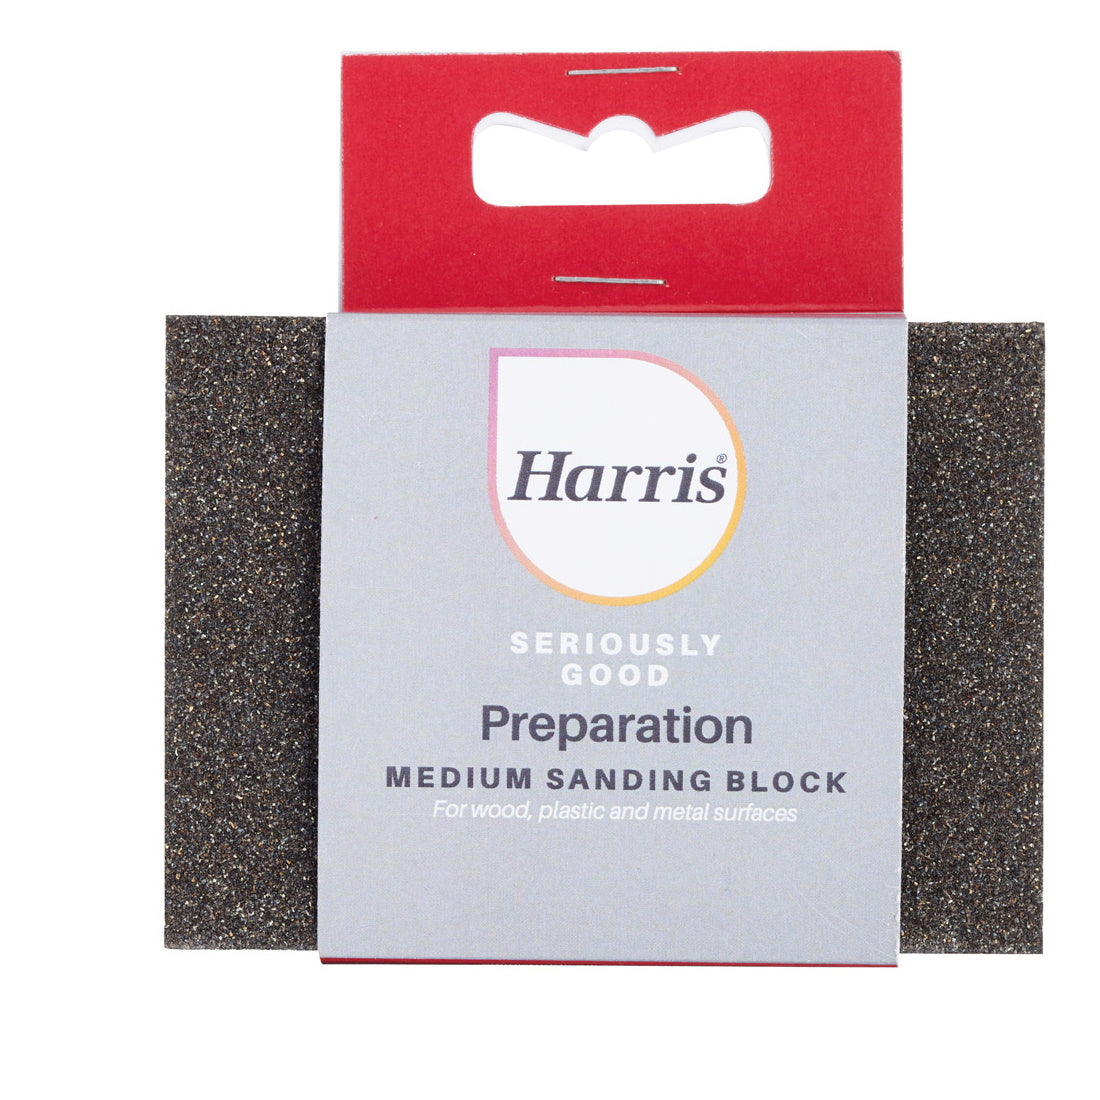 Harris Seriously Good Preparation Sanding Block - Various Grits - Premium Sanding from HARRIS - Just $1.2! Shop now at W Hurst & Son (IW) Ltd